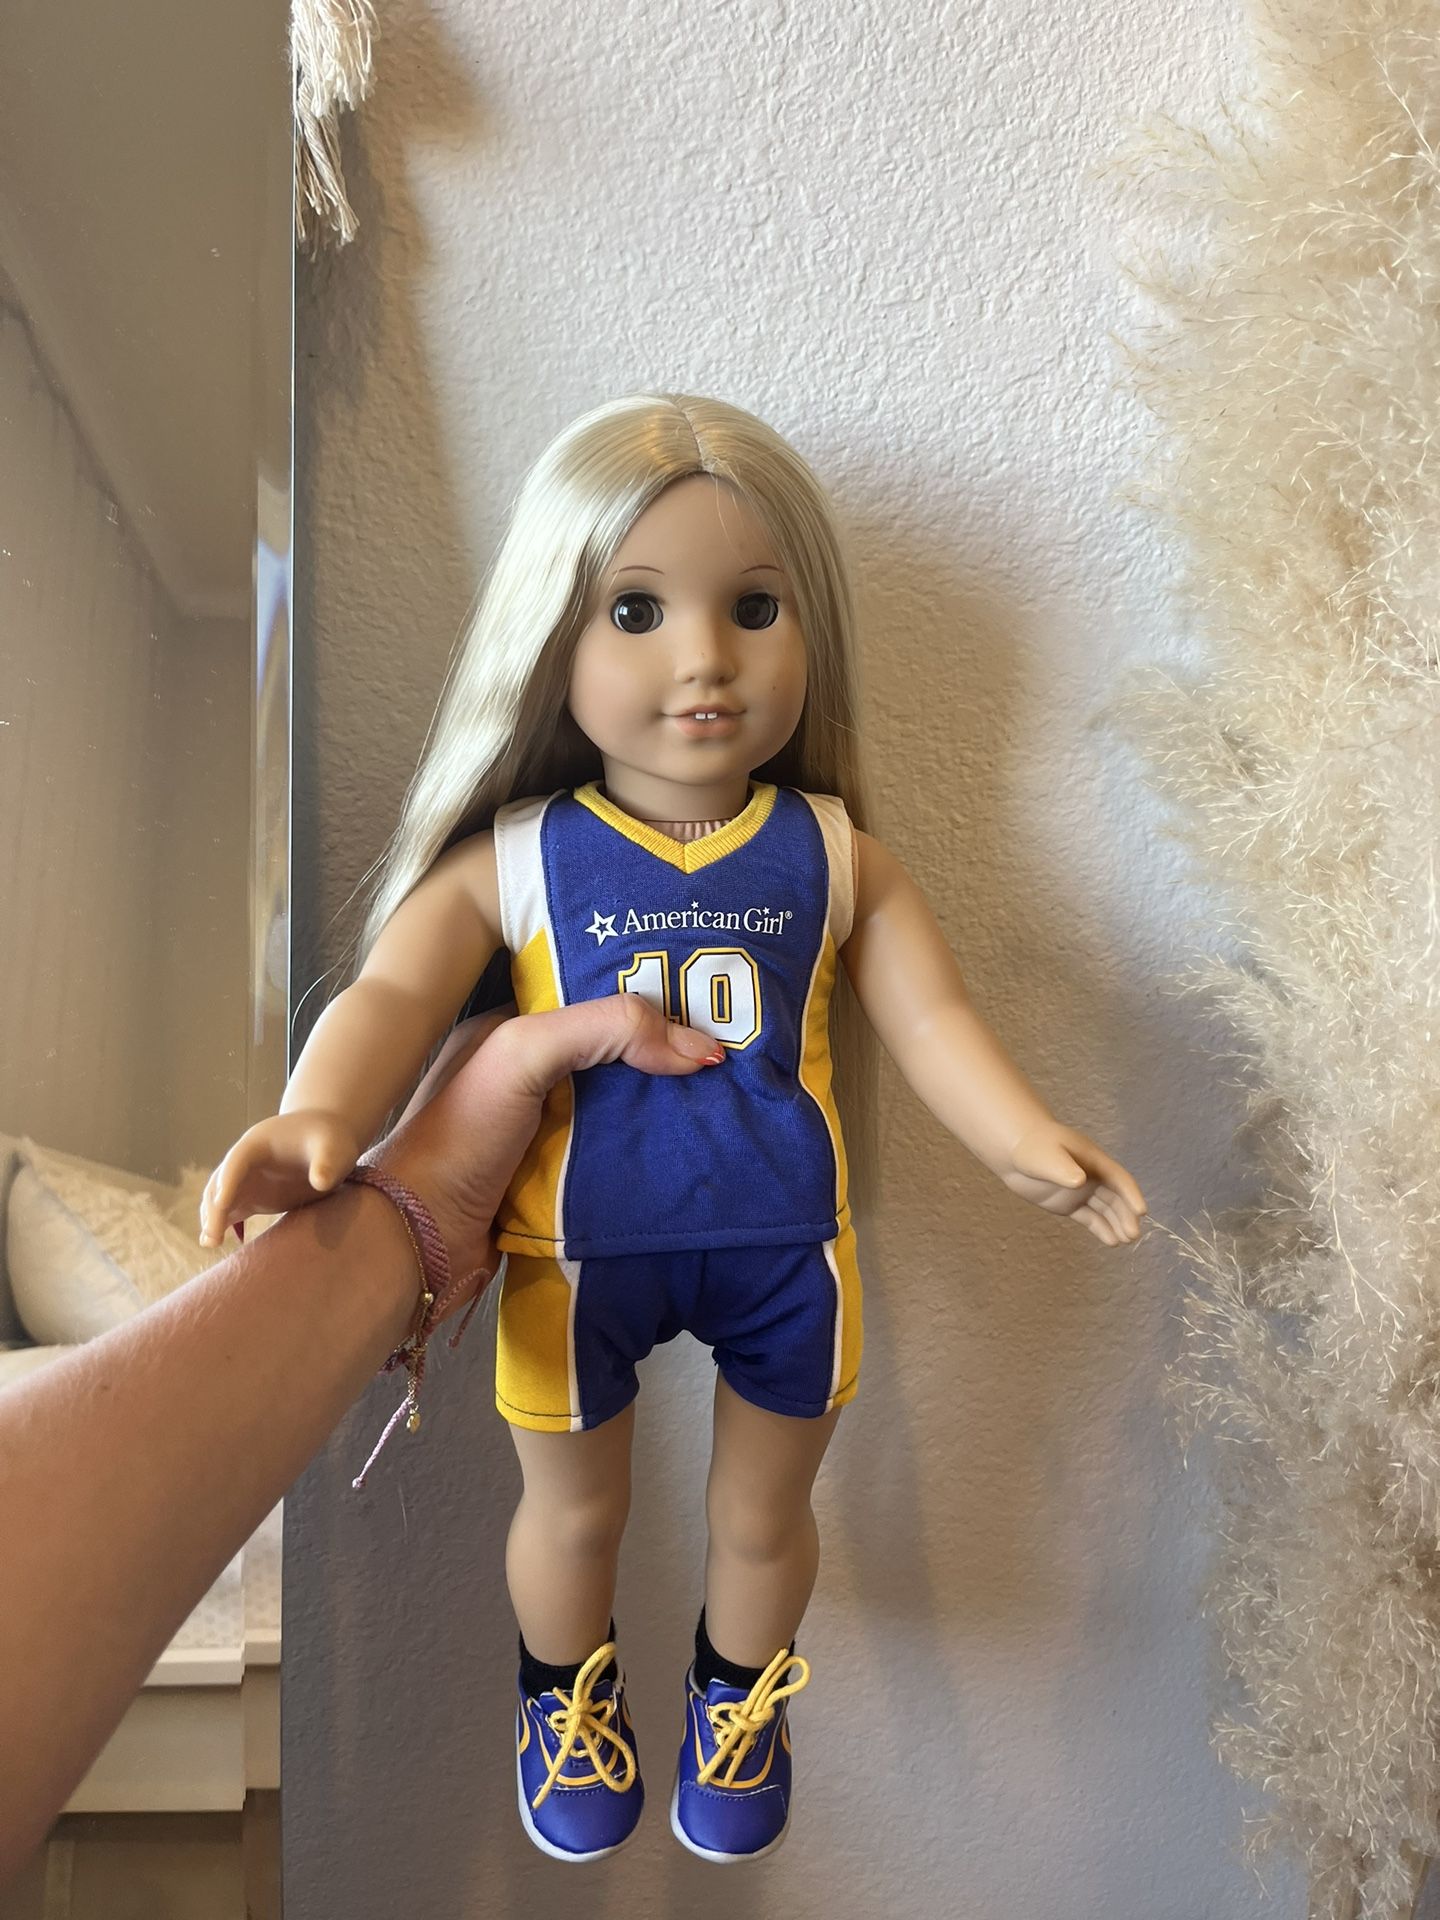 American Girl Doll, Blonde, Basketball